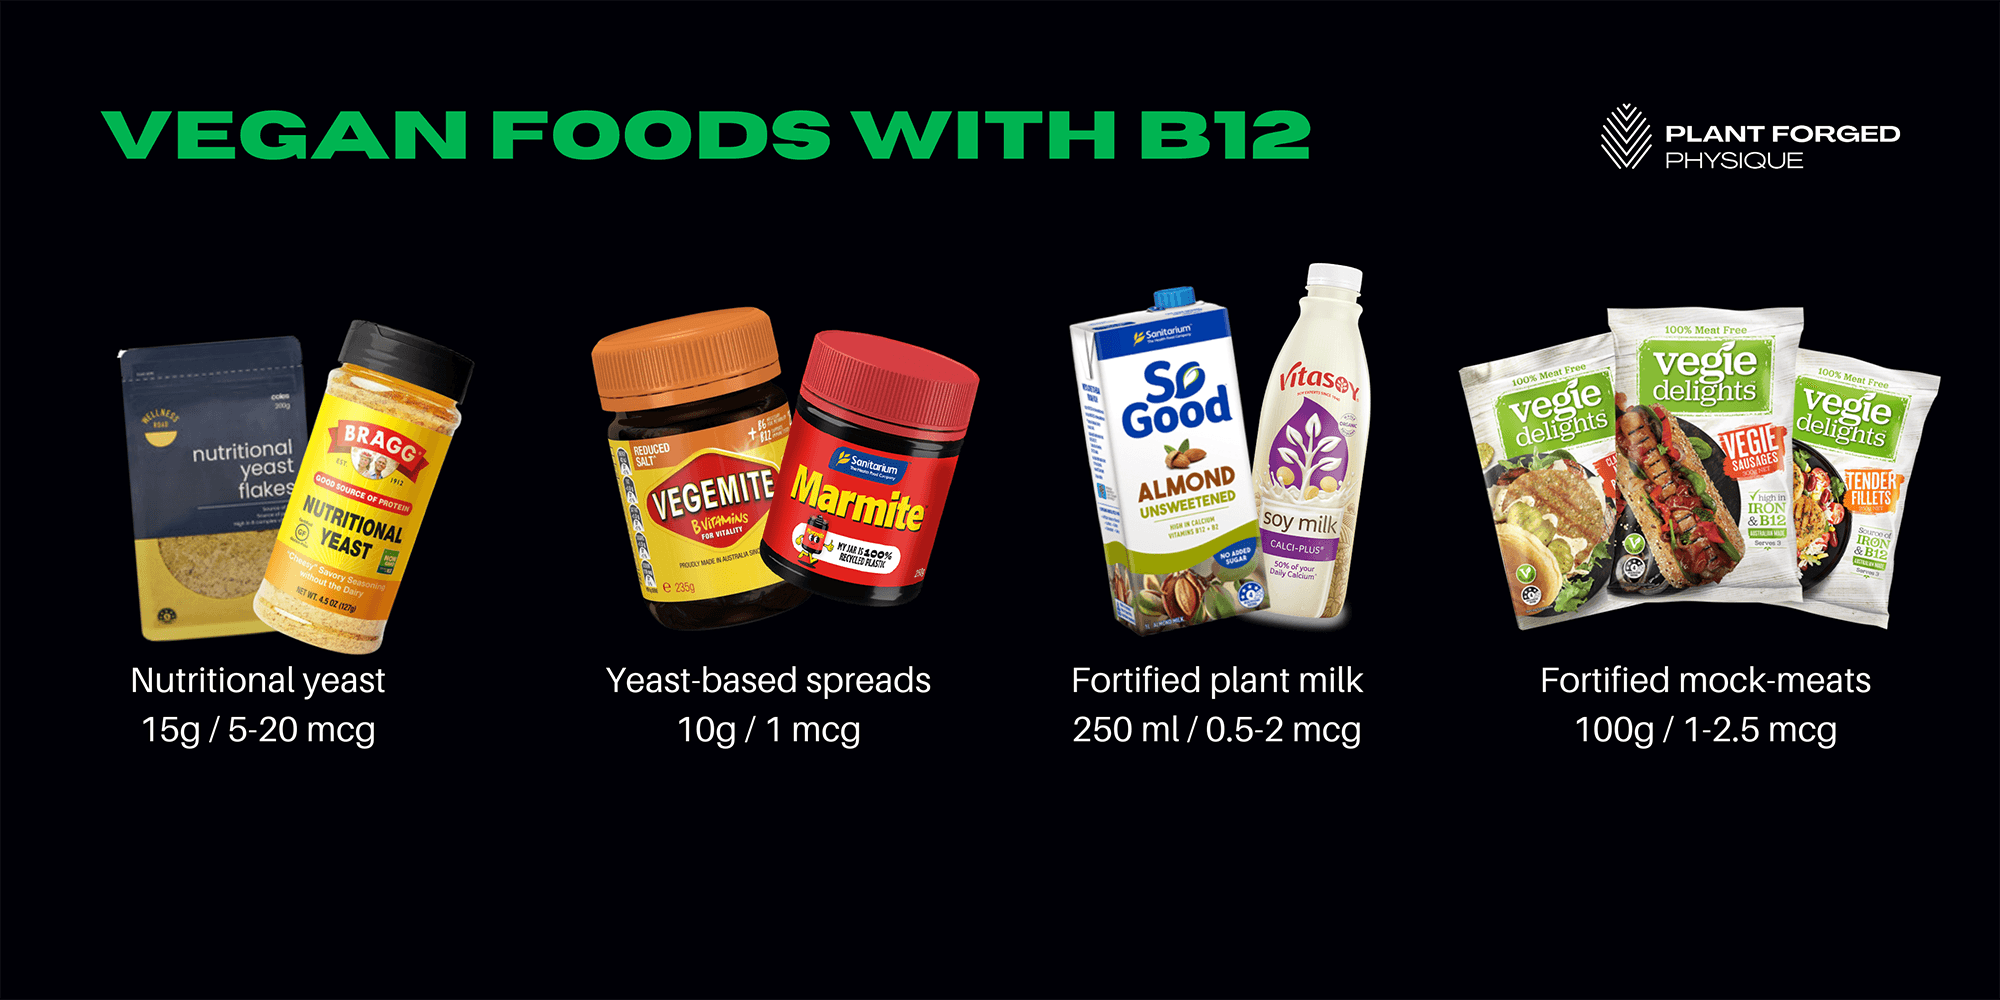 Vegan foods with B12